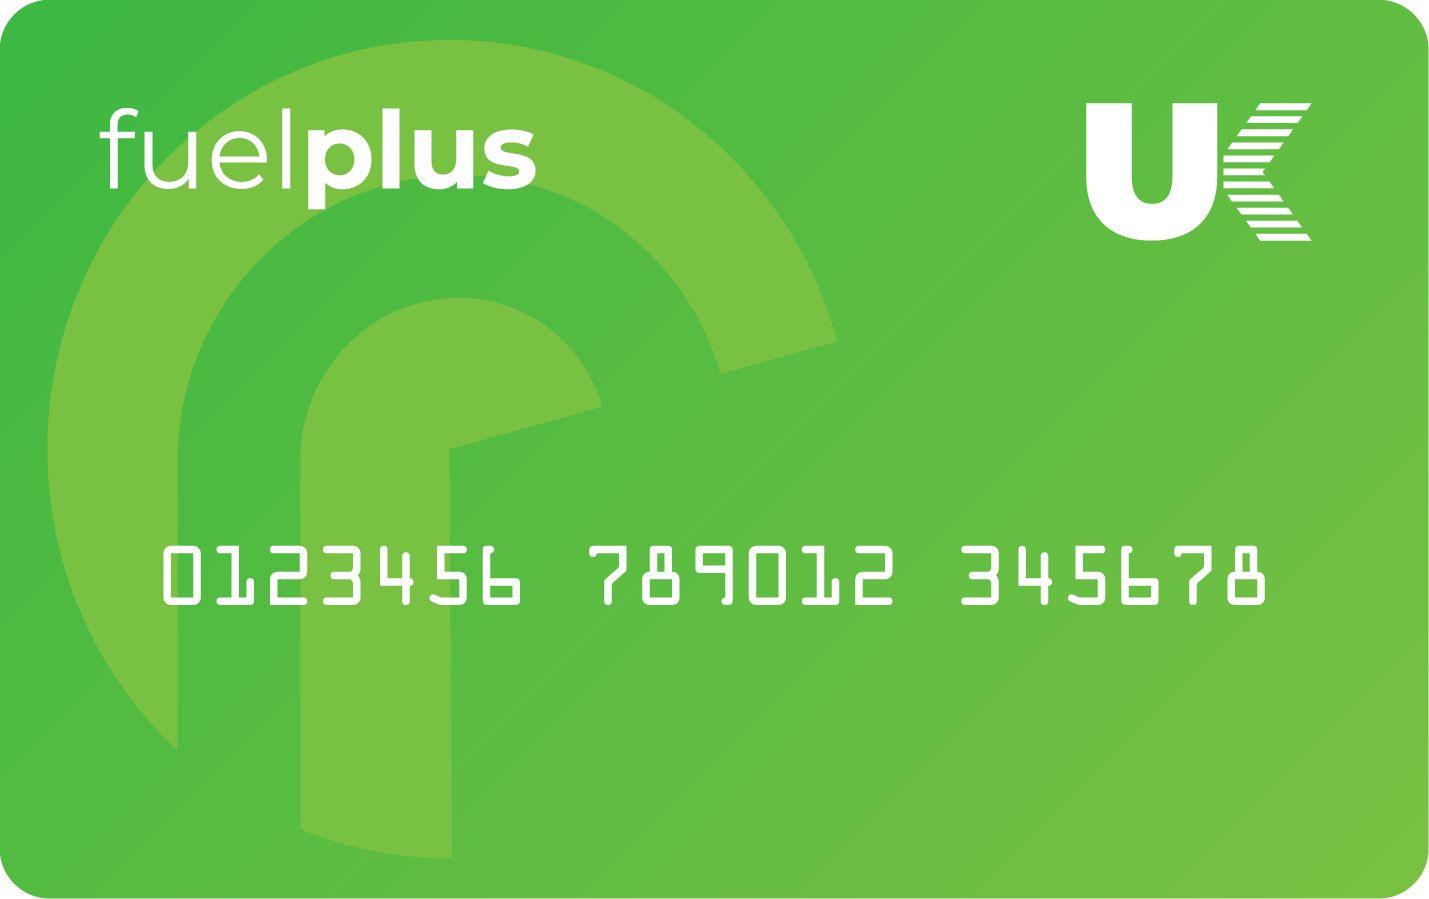 Fuelplus Uk fuels fuel card